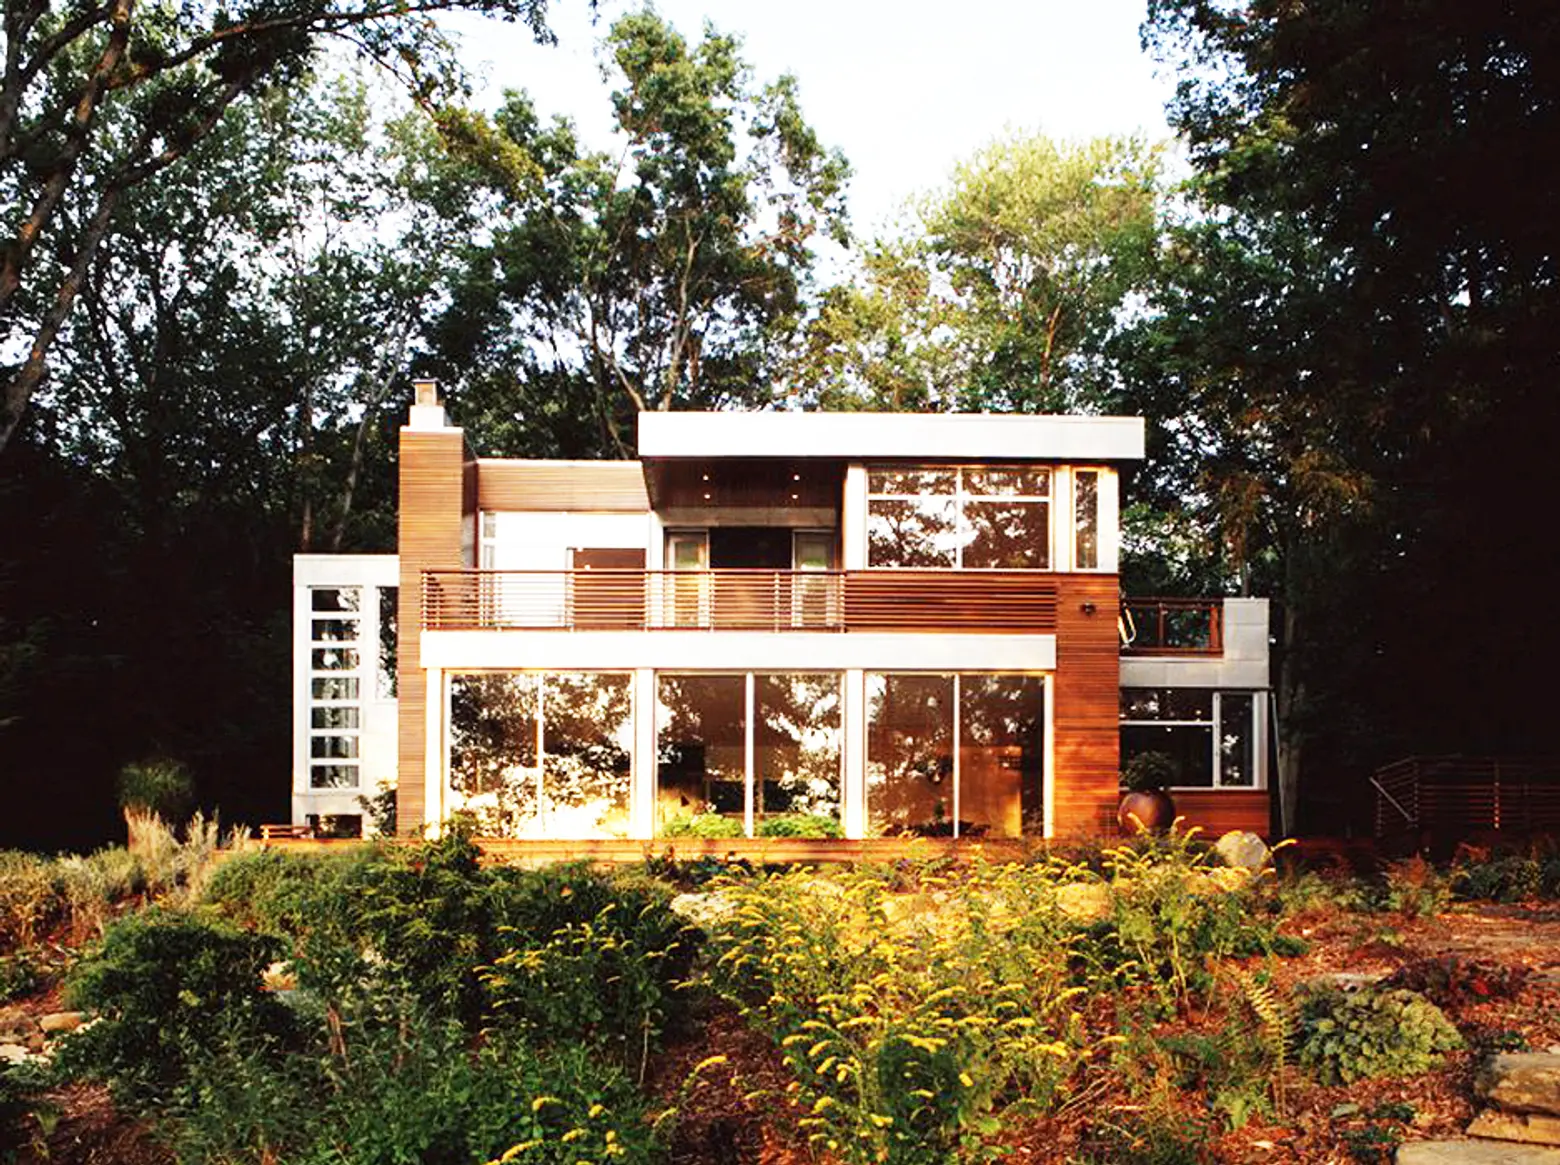 Resolution: 4 Architecture, Lakeside House, Sagamore Lake, white oak floors, woodland views, natural light, Kent, NY,